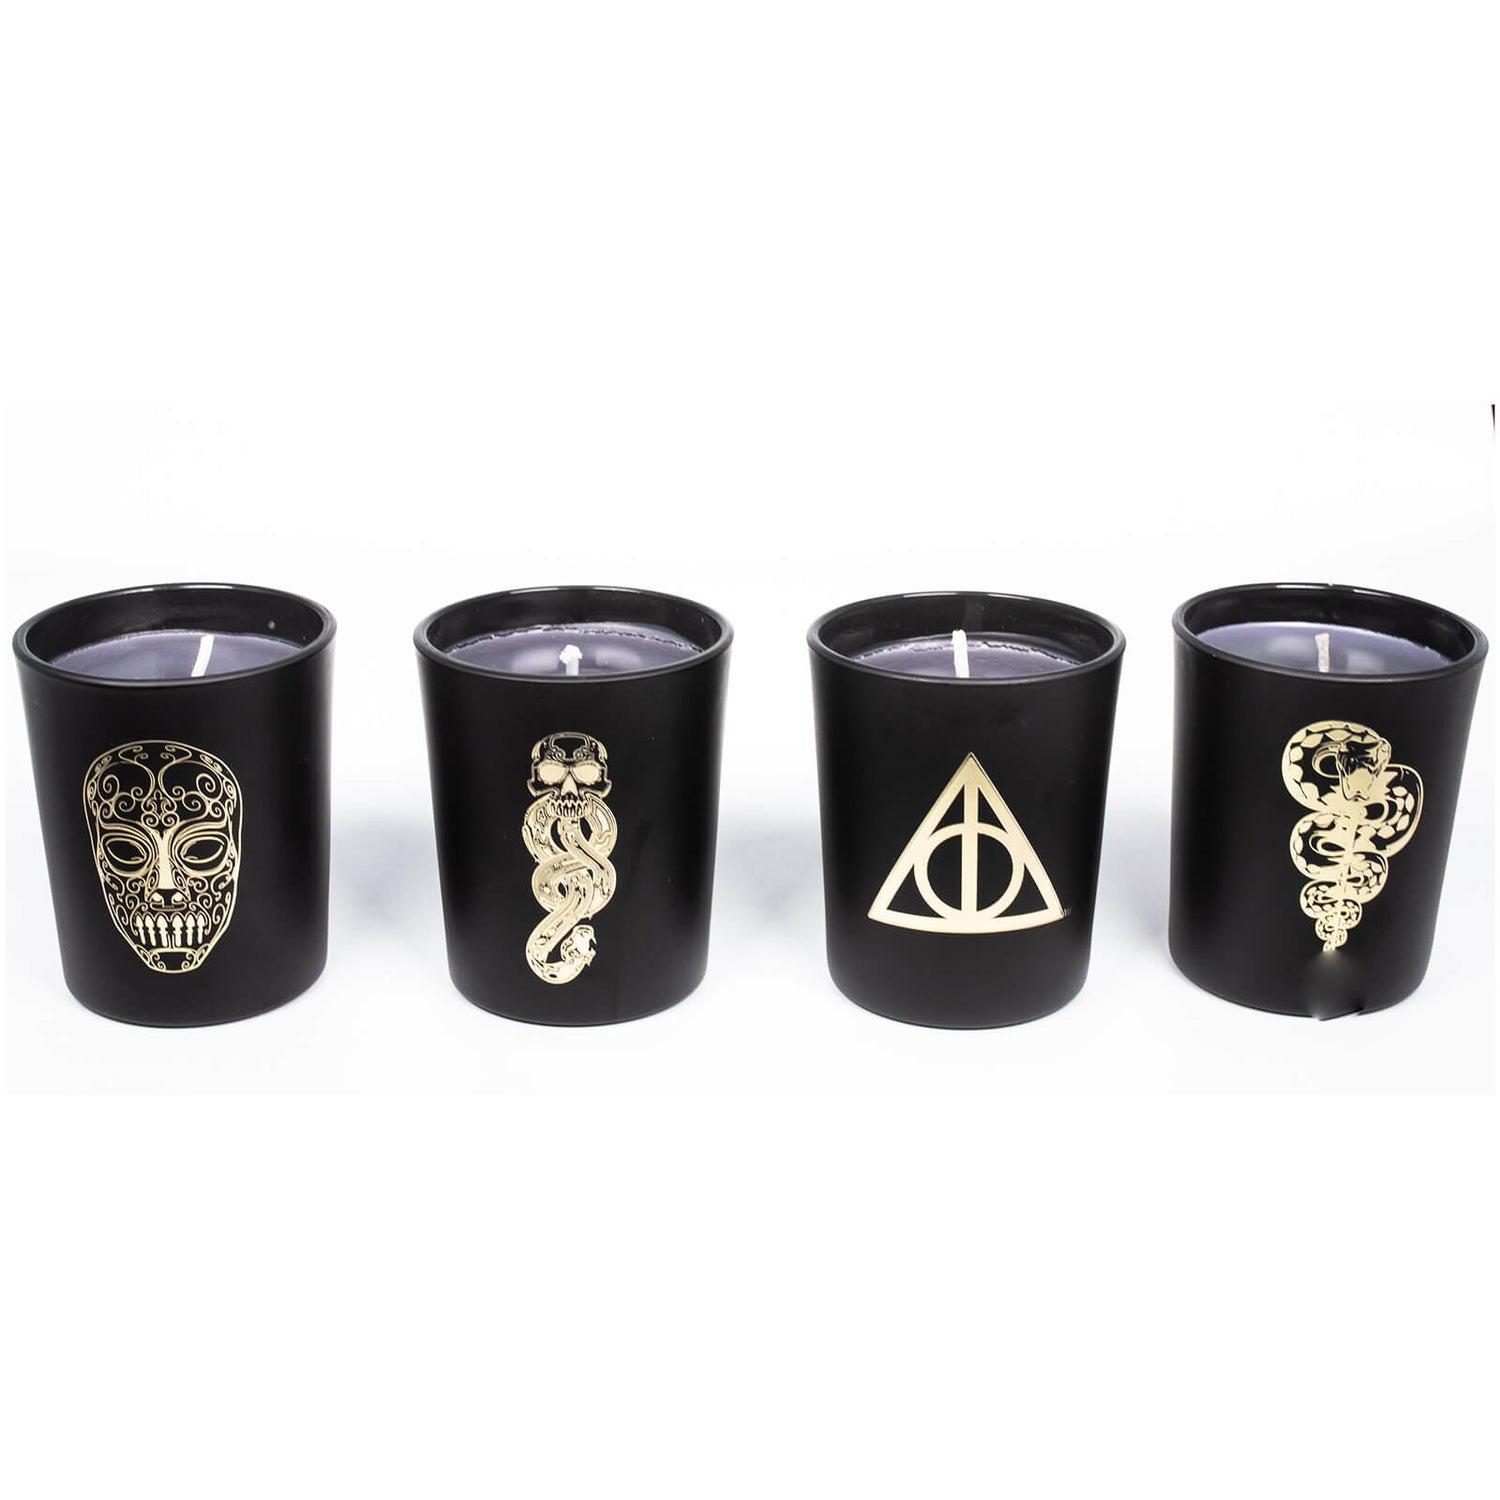 Harry Potter Dark Arts Candle Set of 4